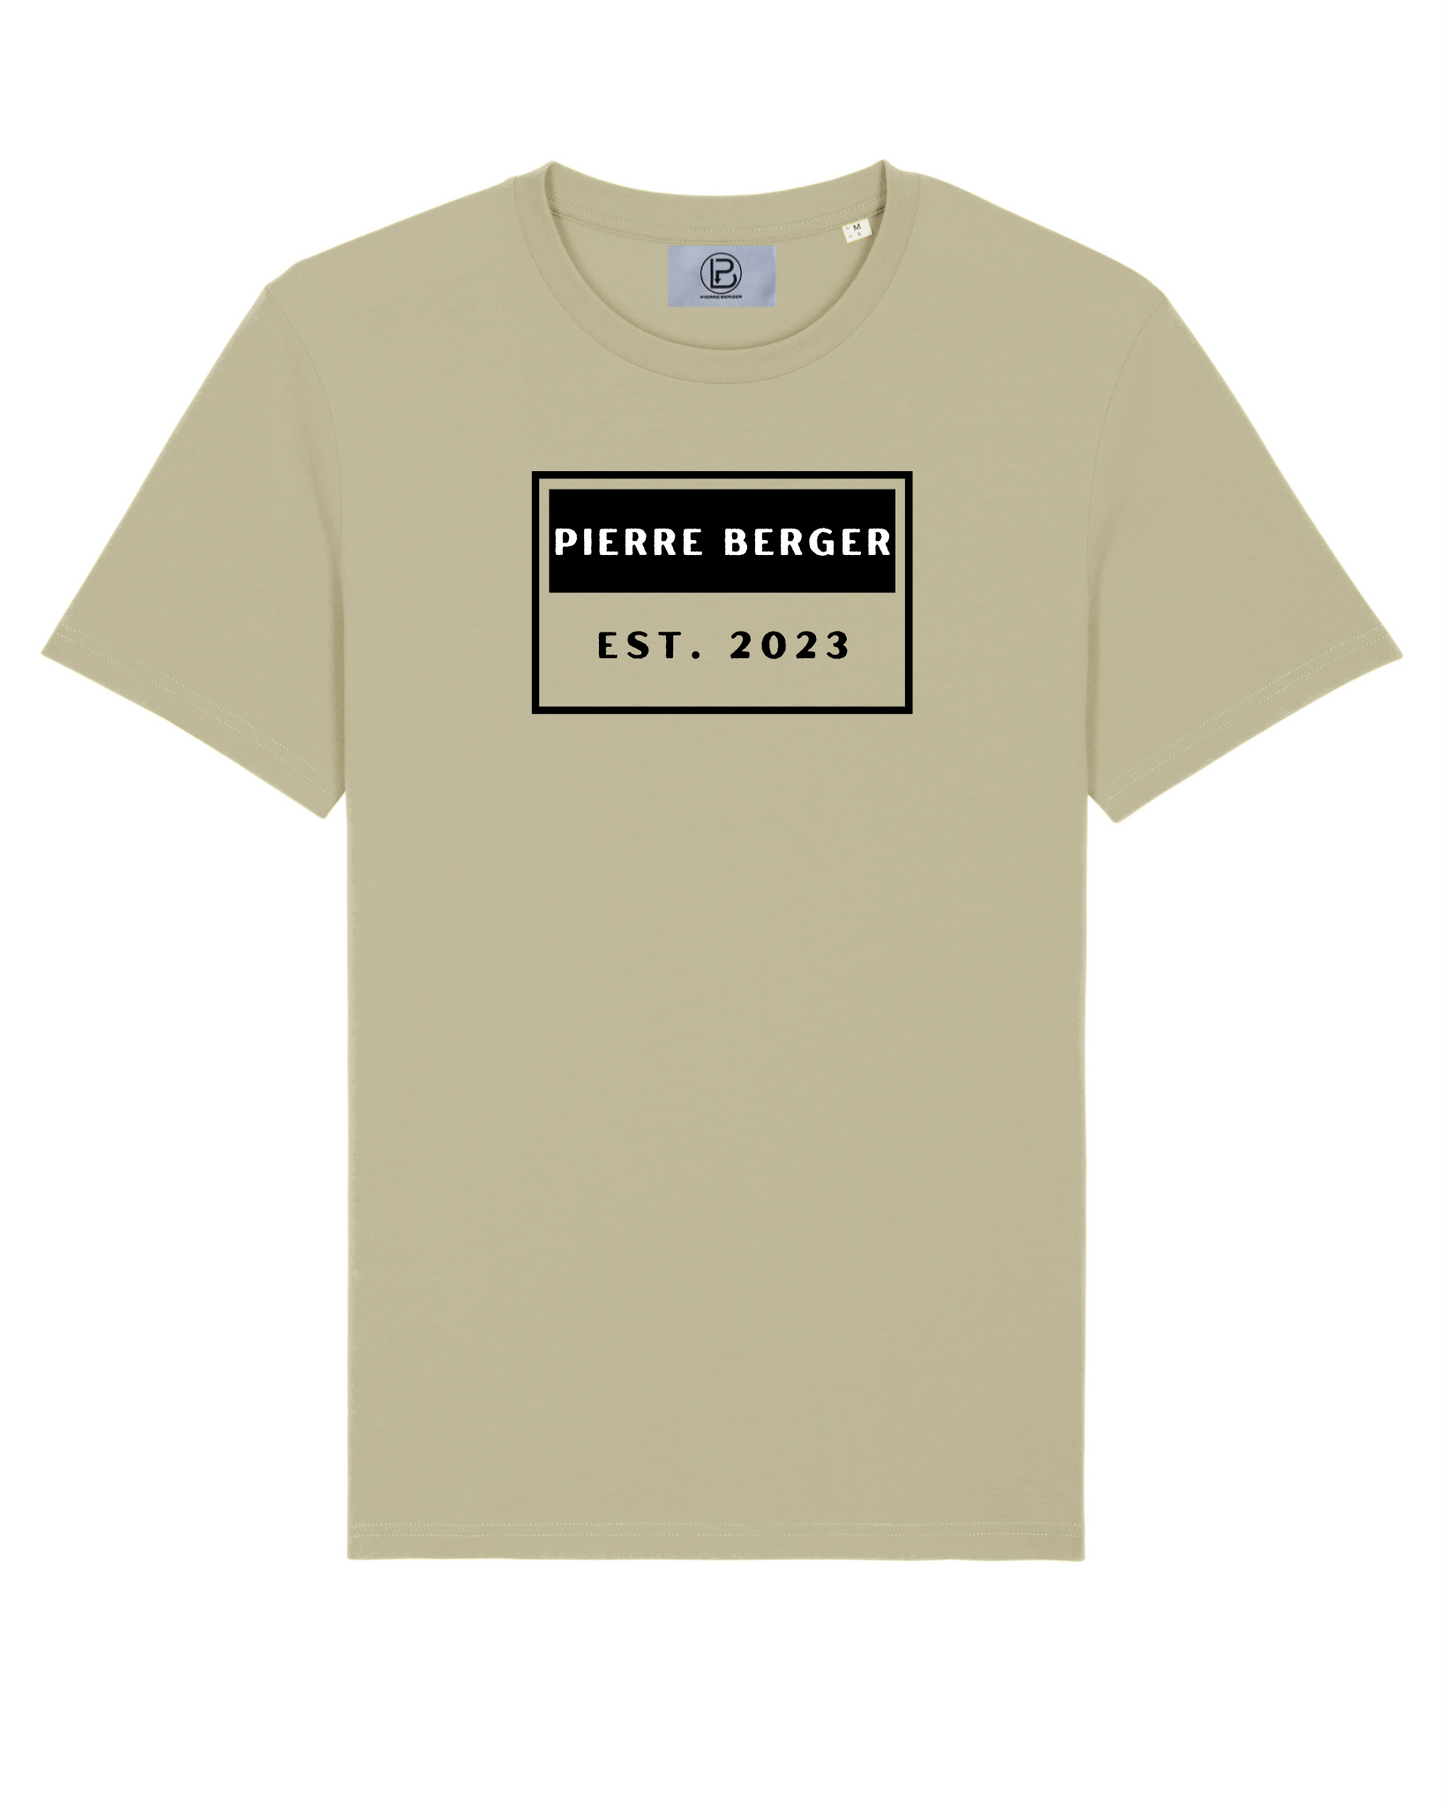 PIERRE BERGER- 100% Bio-Baumwolle Unisex T-Shirt Black and White Minimalist Typography